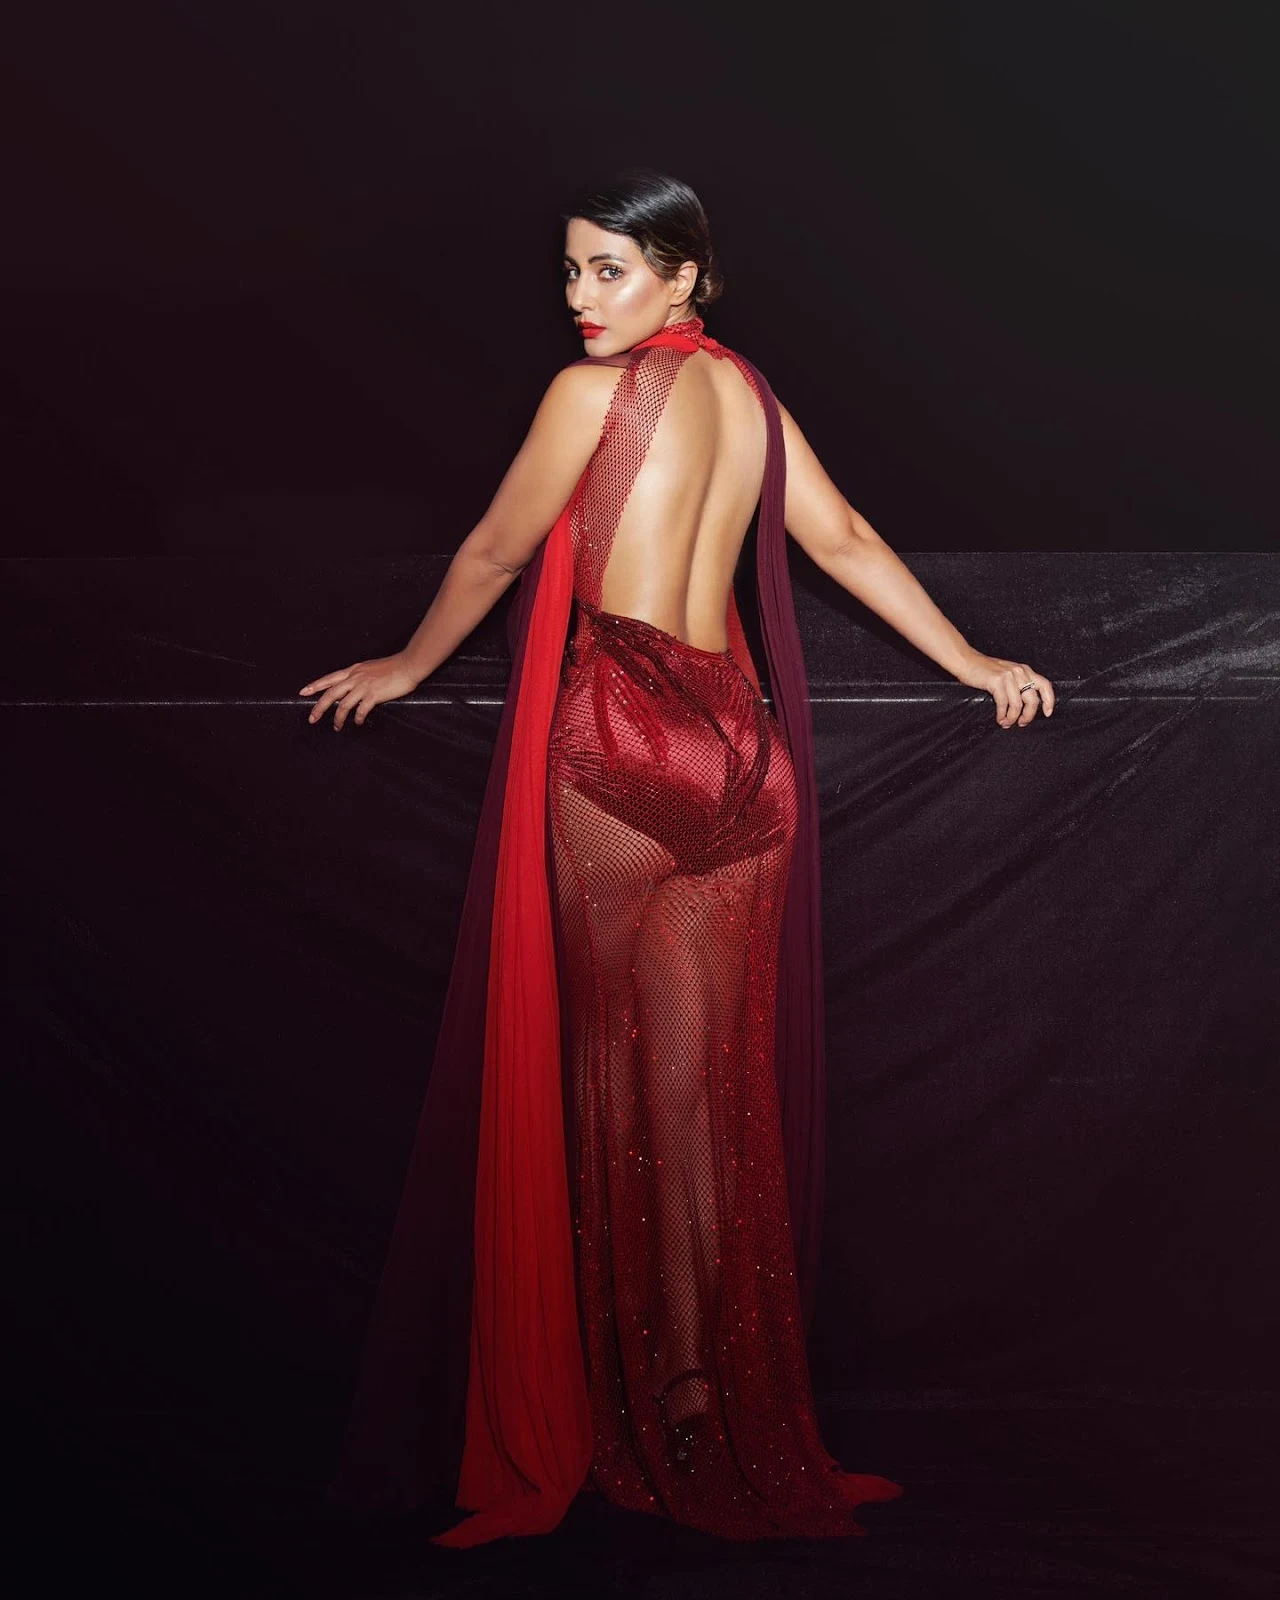 Hina Khan backless sheer red dress hello magazine awards